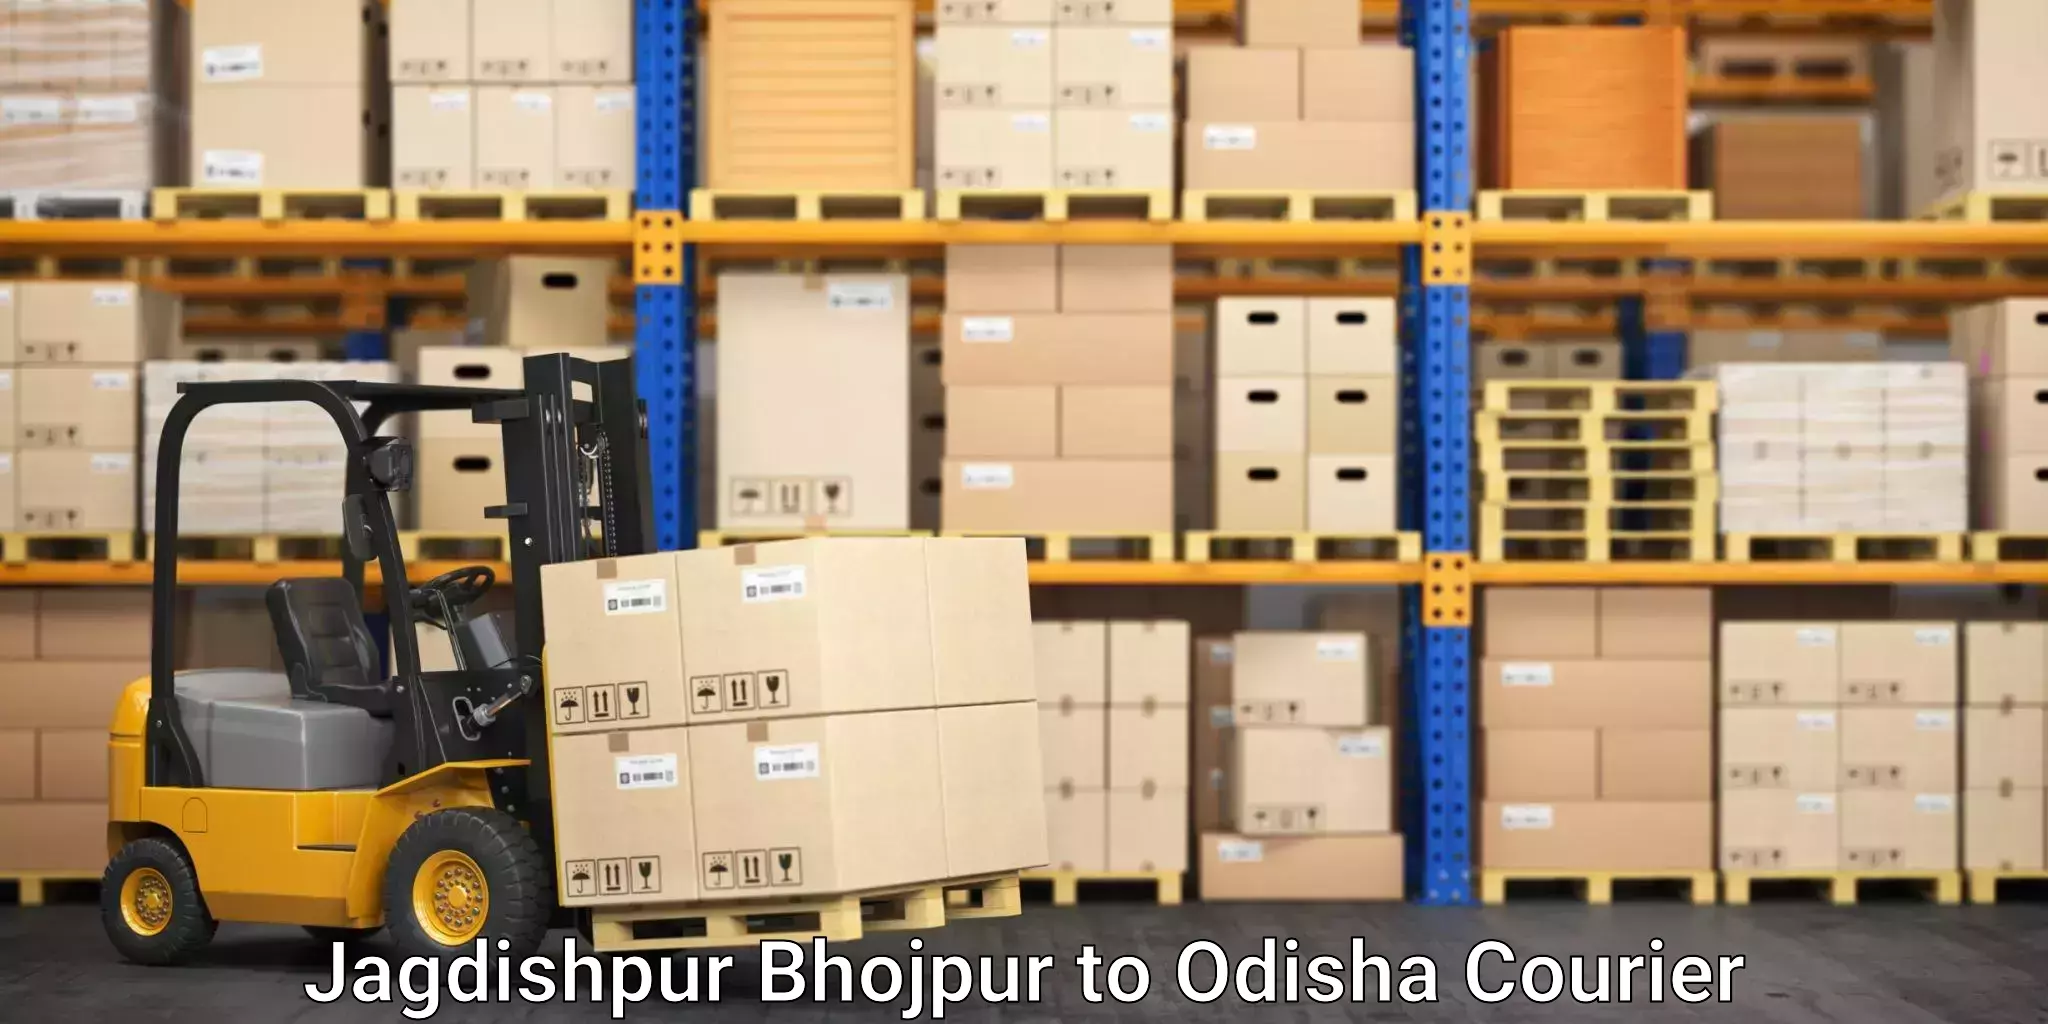 Efficient moving company Jagdishpur Bhojpur to Barbil